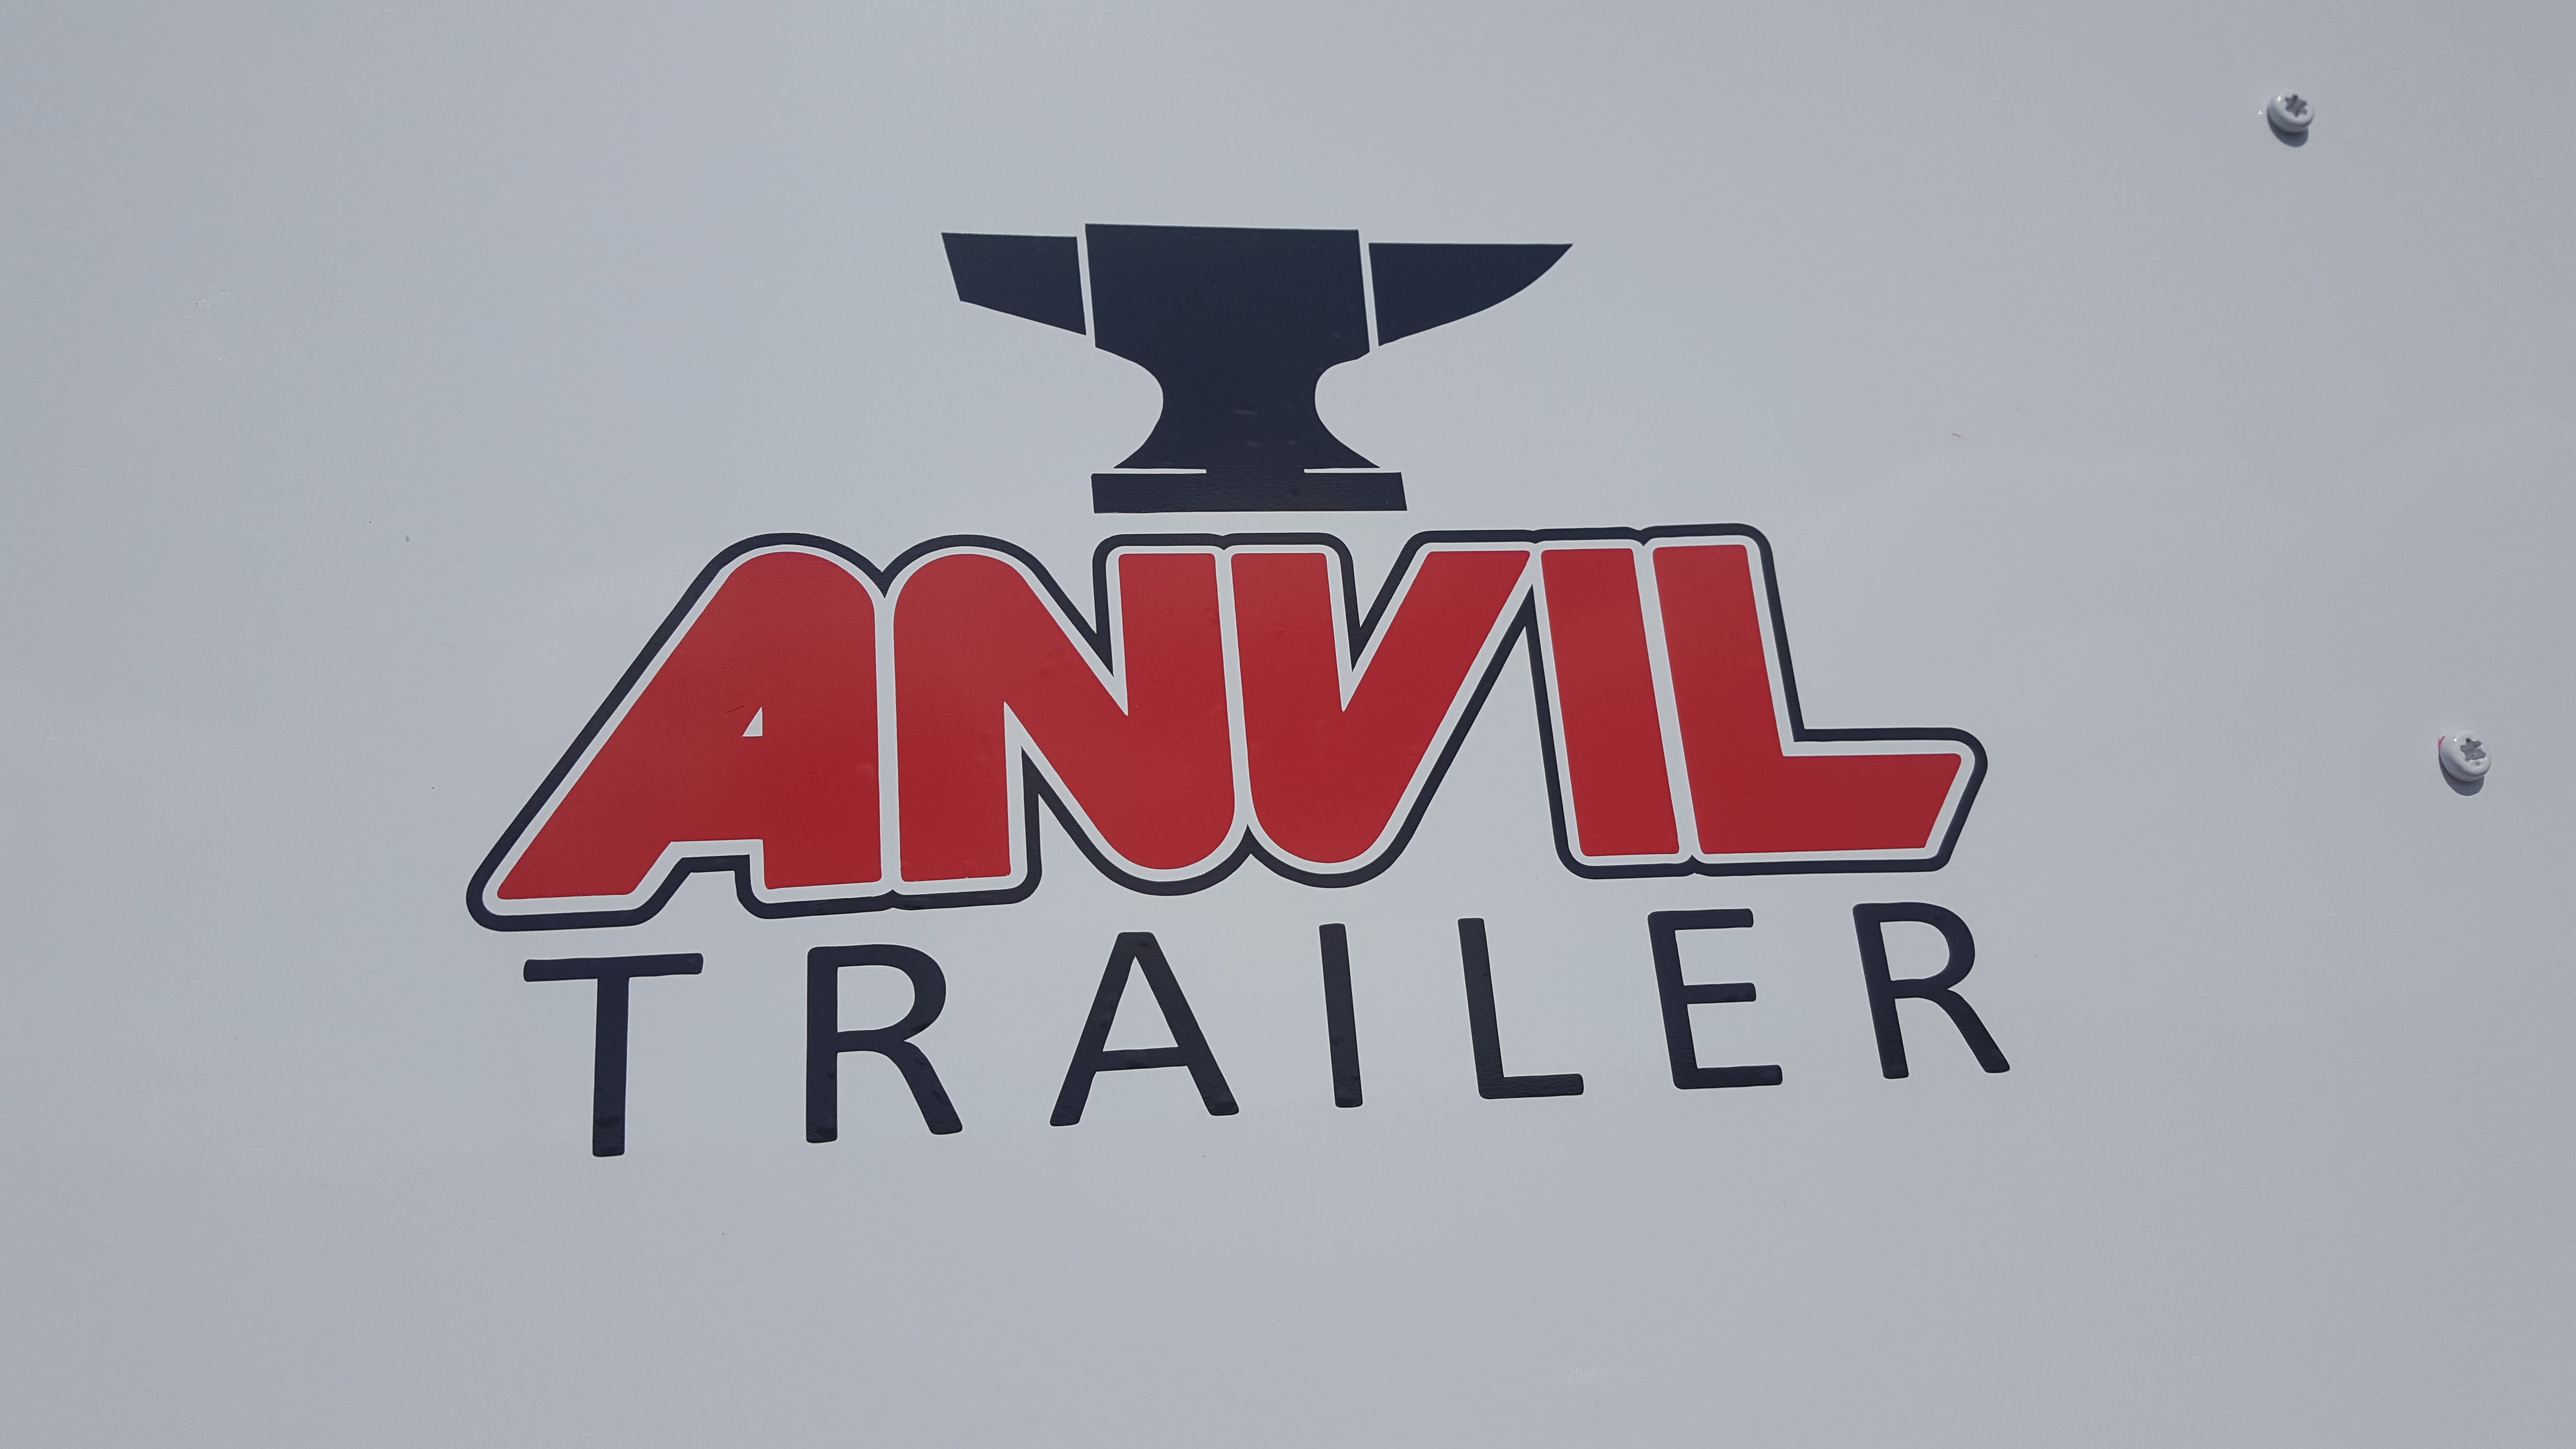 anvil trailer specs